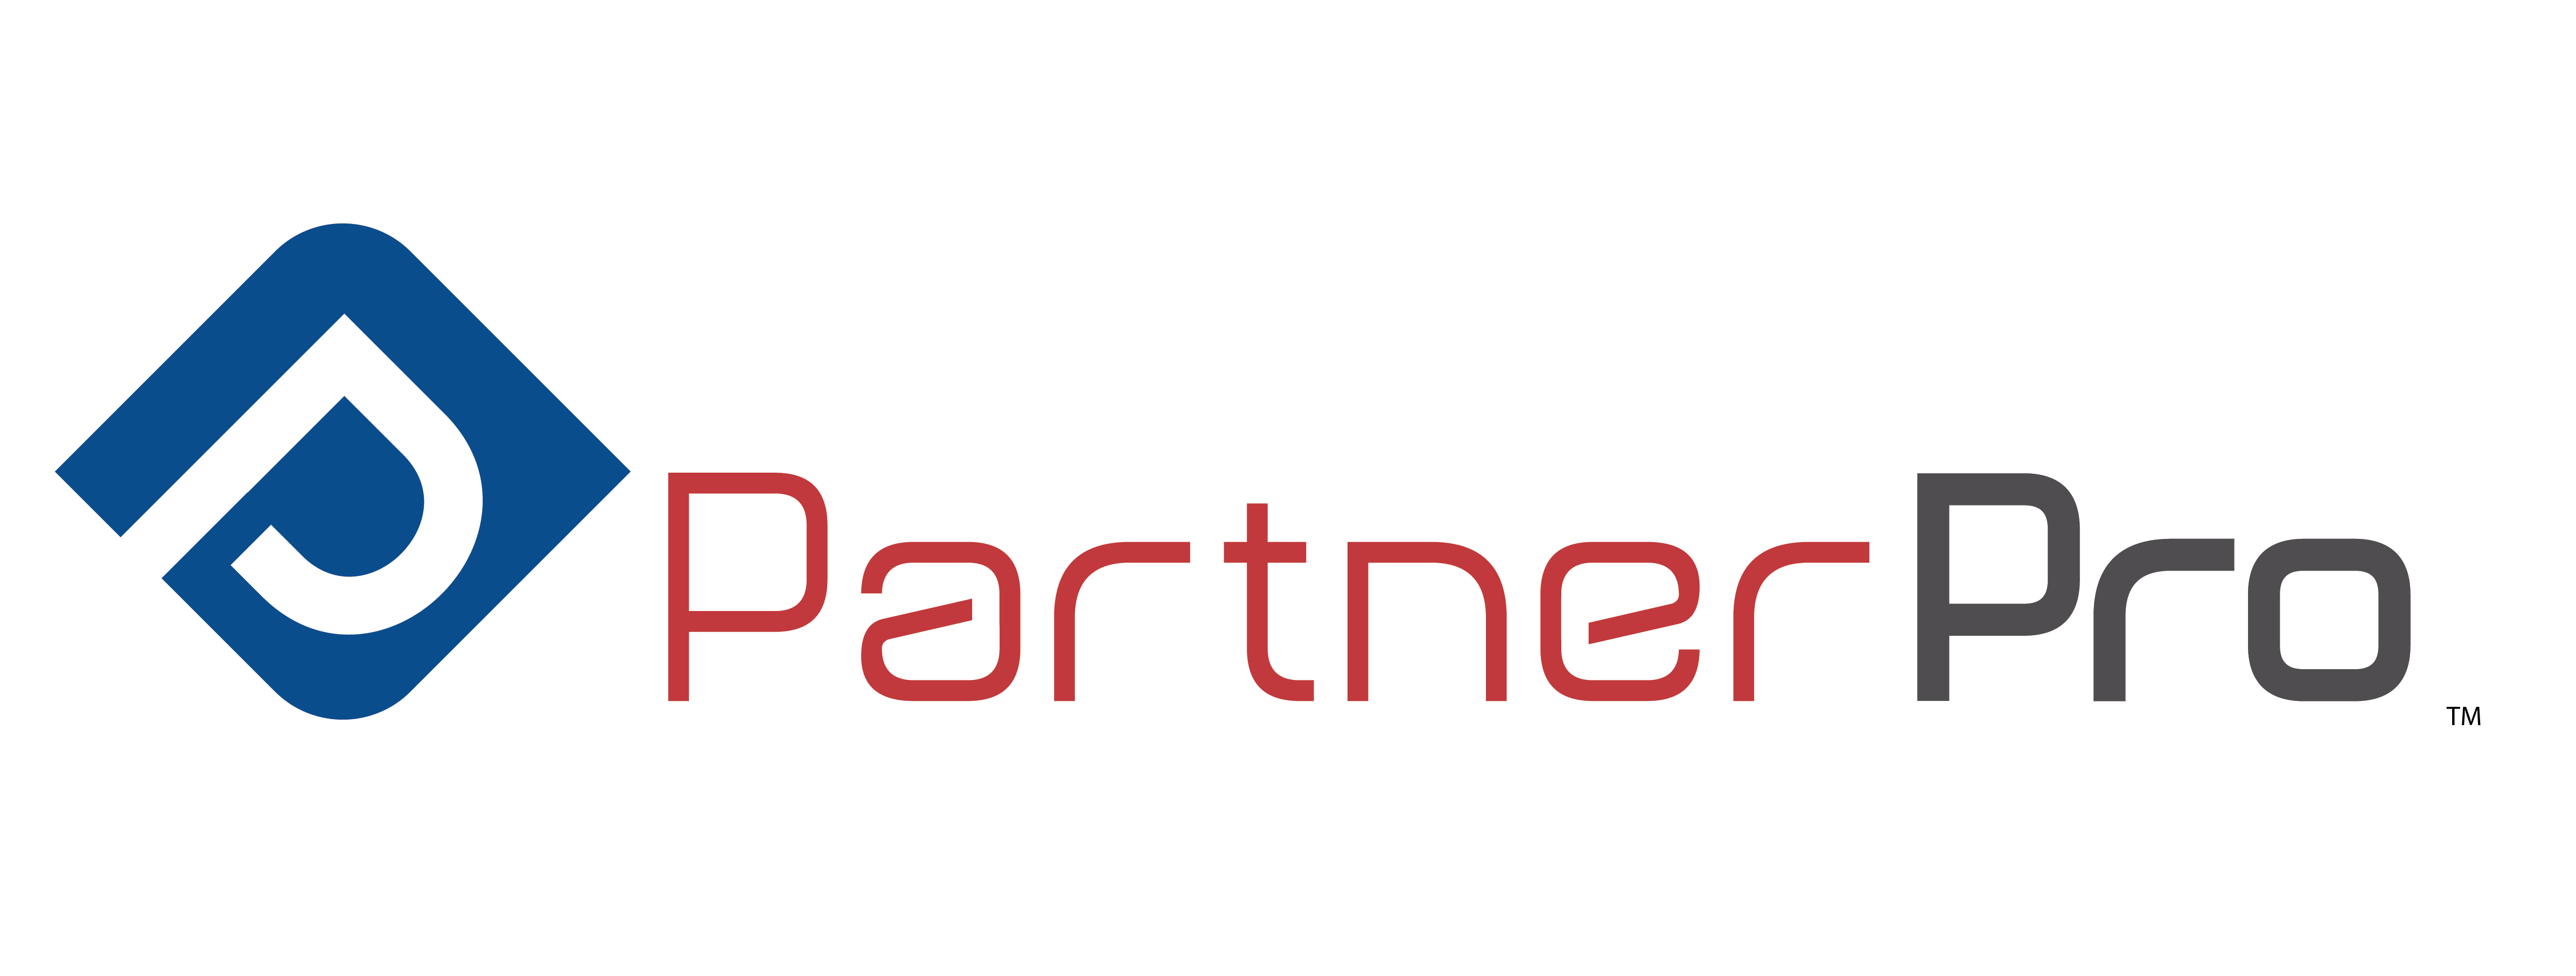 Partner Pro